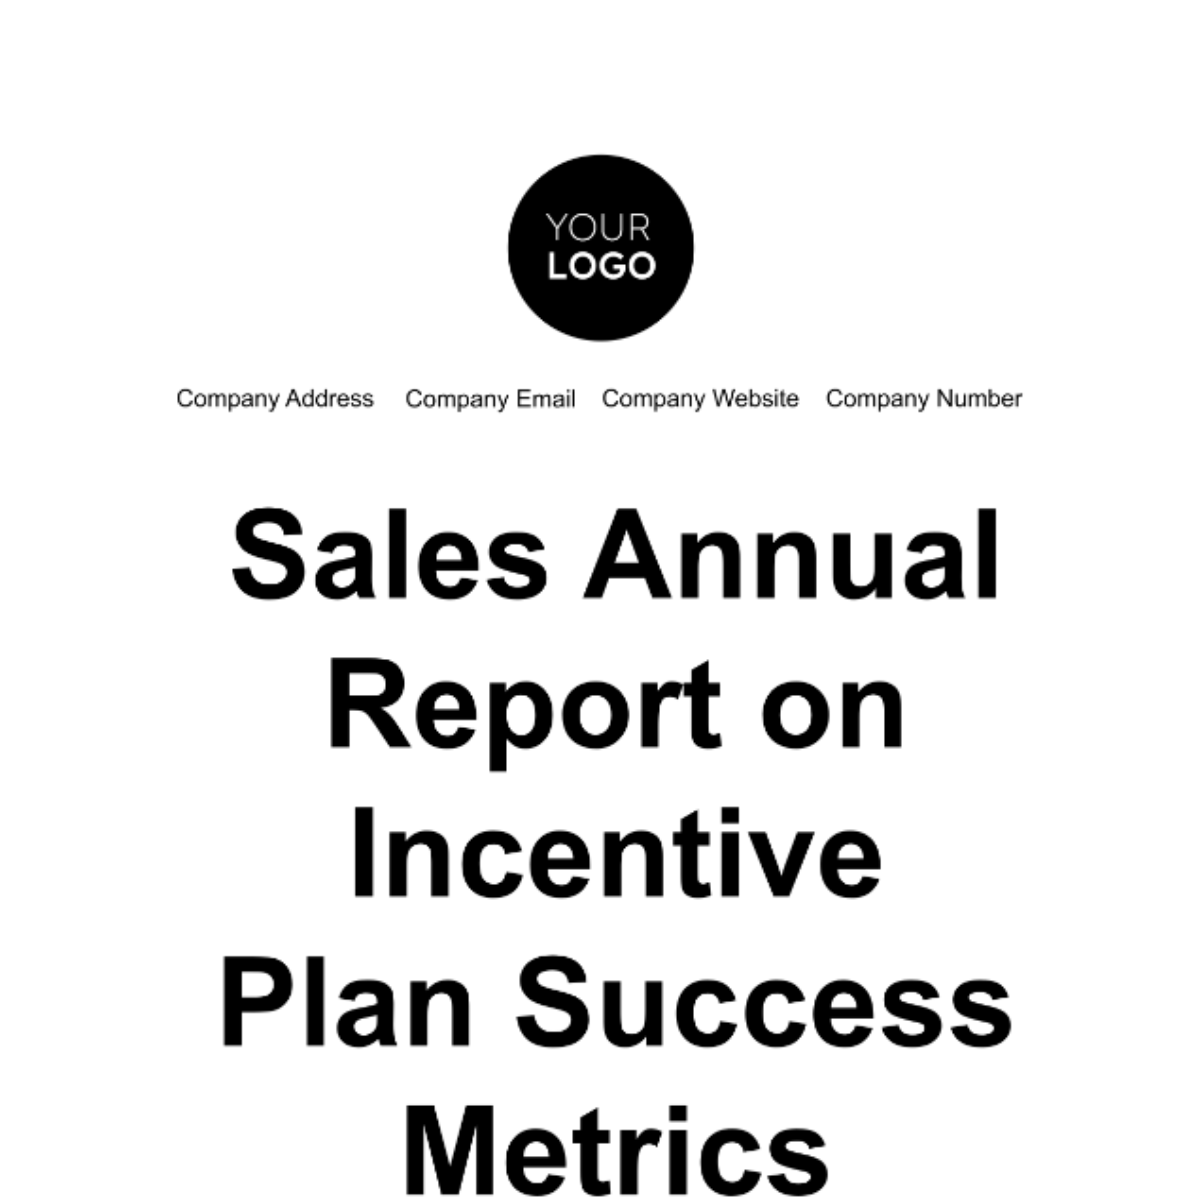 Sales Annual Report on Incentive Plan Success Metrics Template